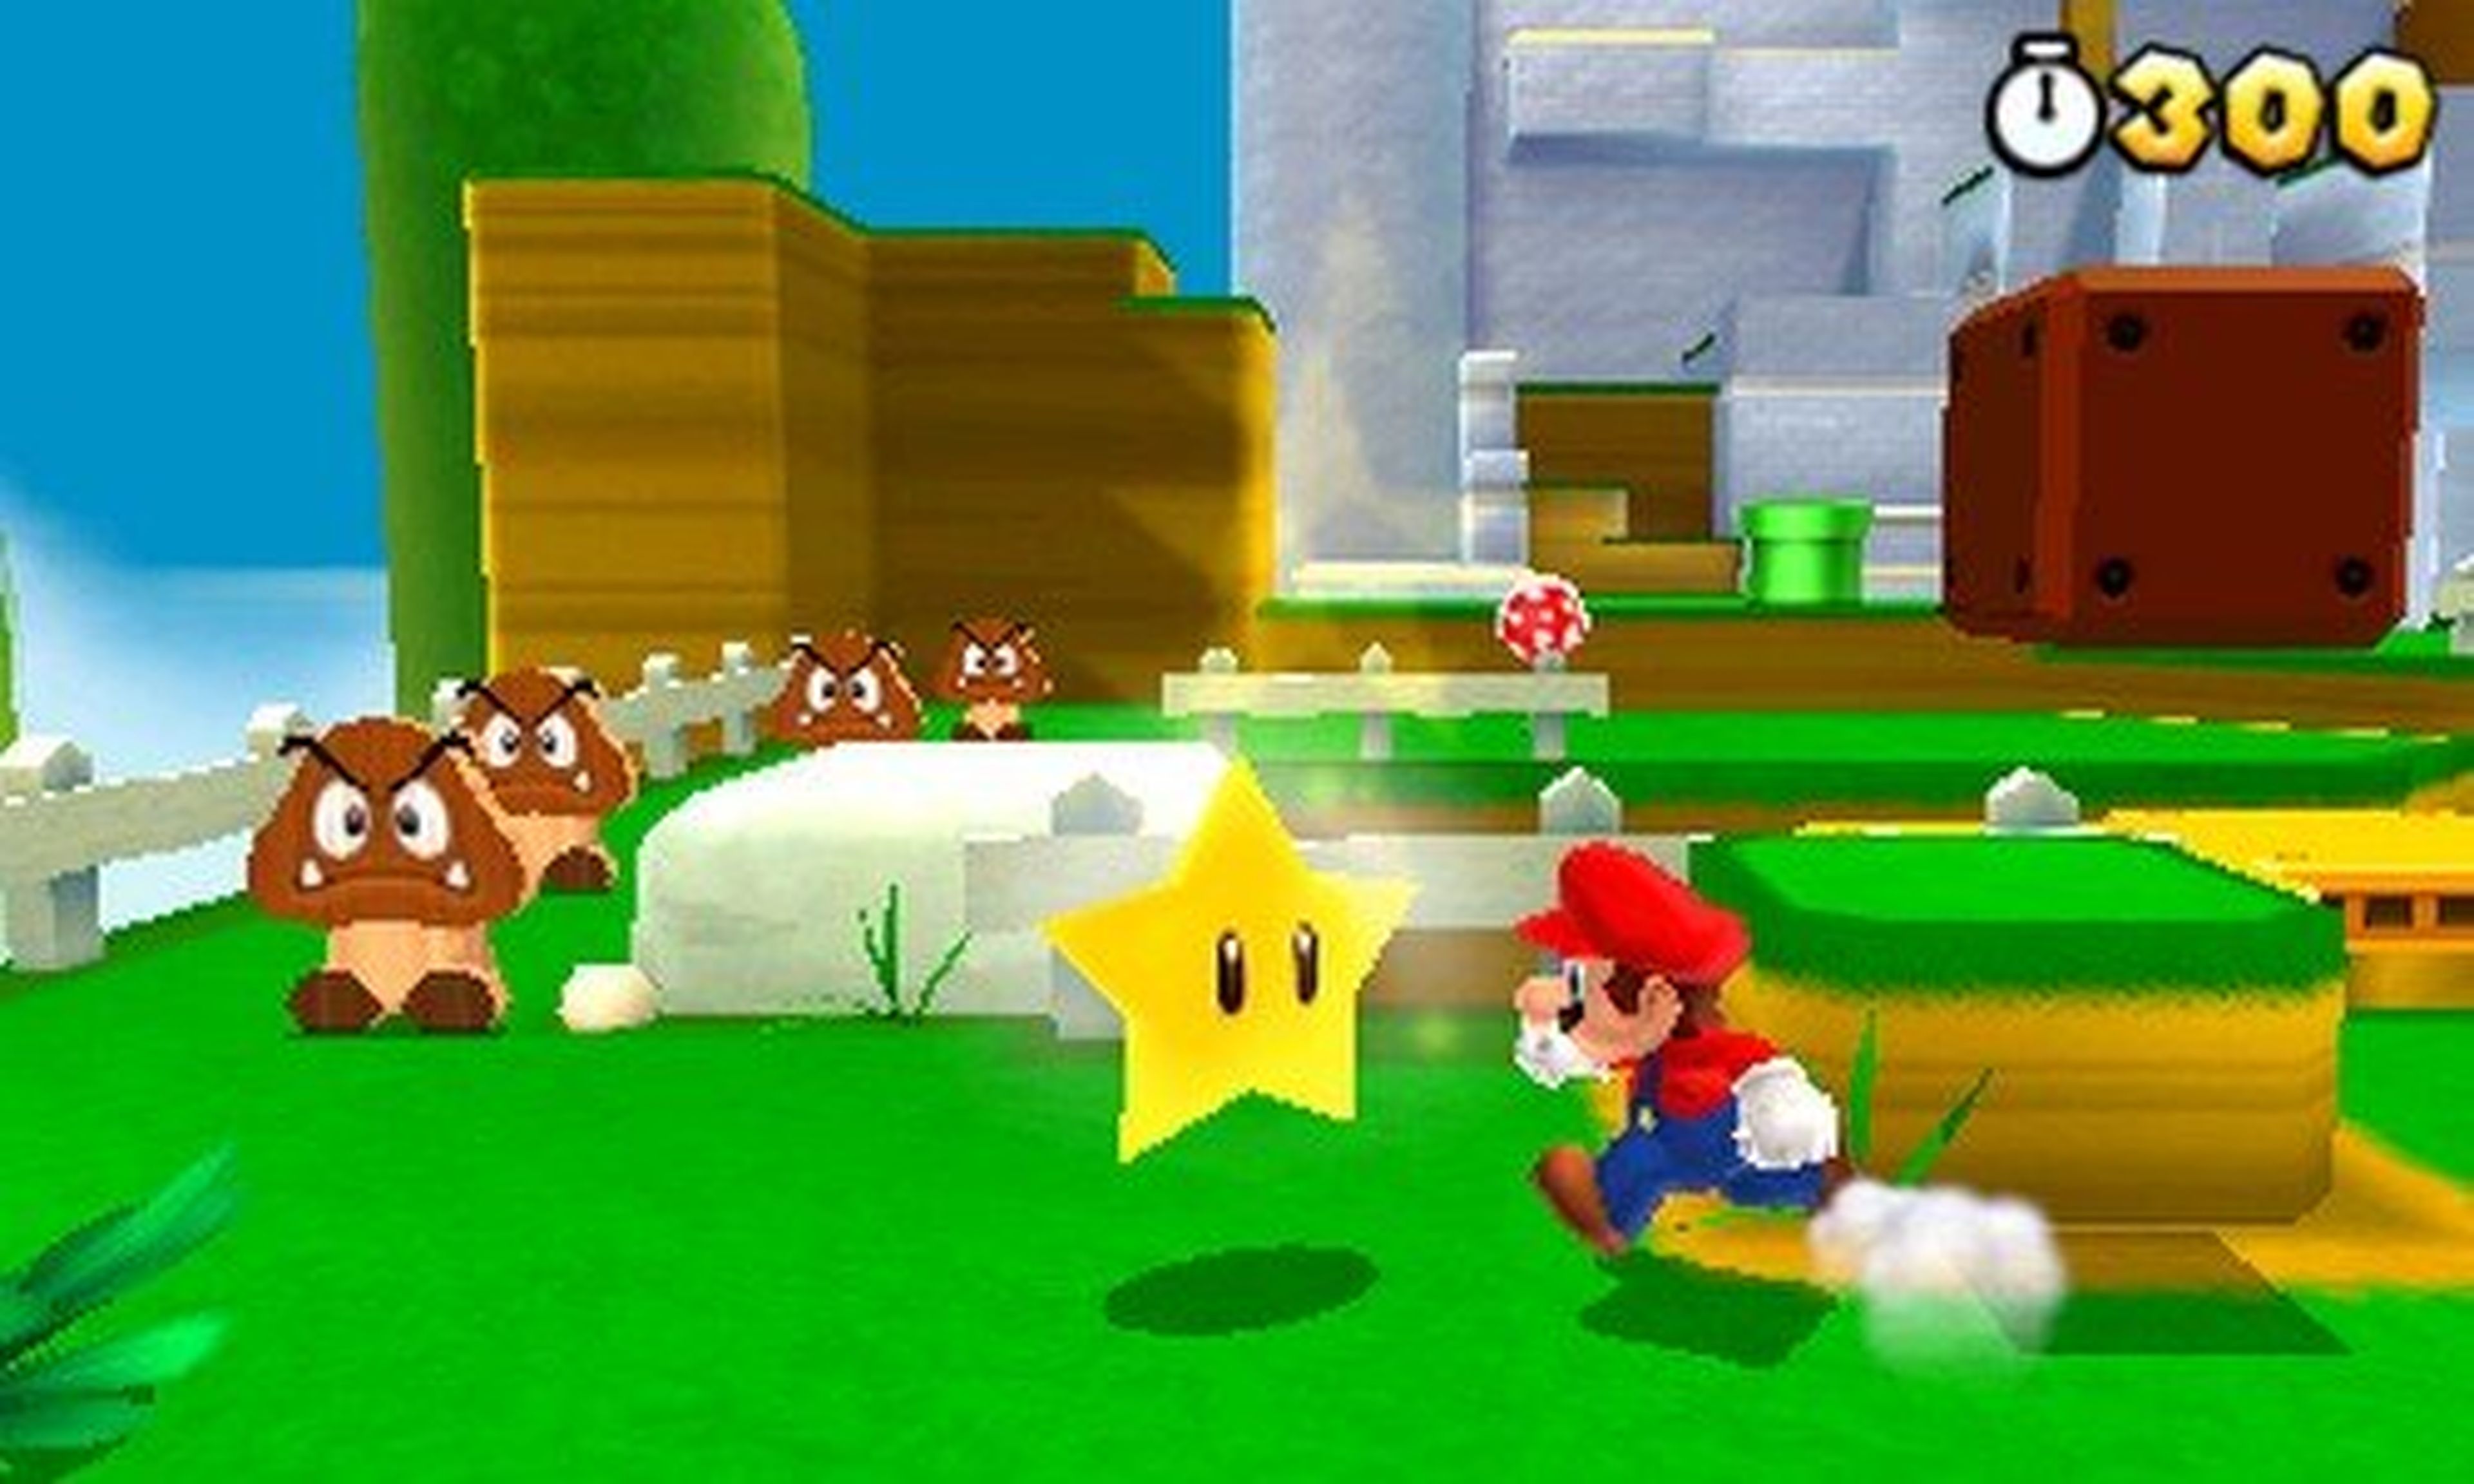 Mario игры 3. Super Mario 3ds. Super Mario Land 3ds. Super Mario 3d World 3ds. Игры Нинтендо 3ds Mario.